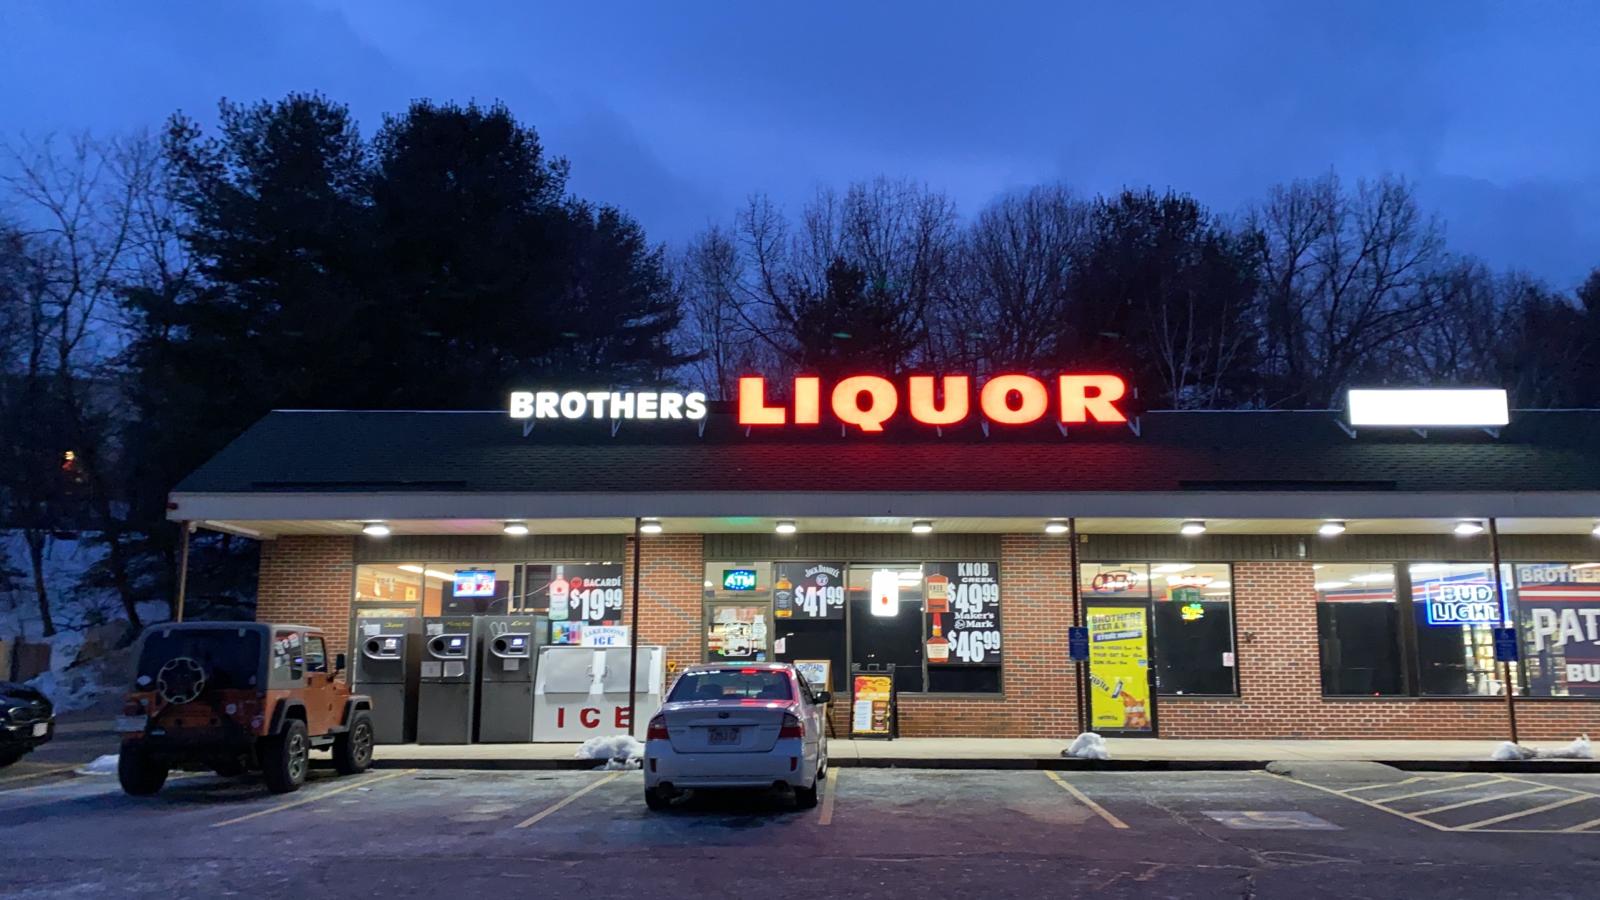 Brothers Liquor